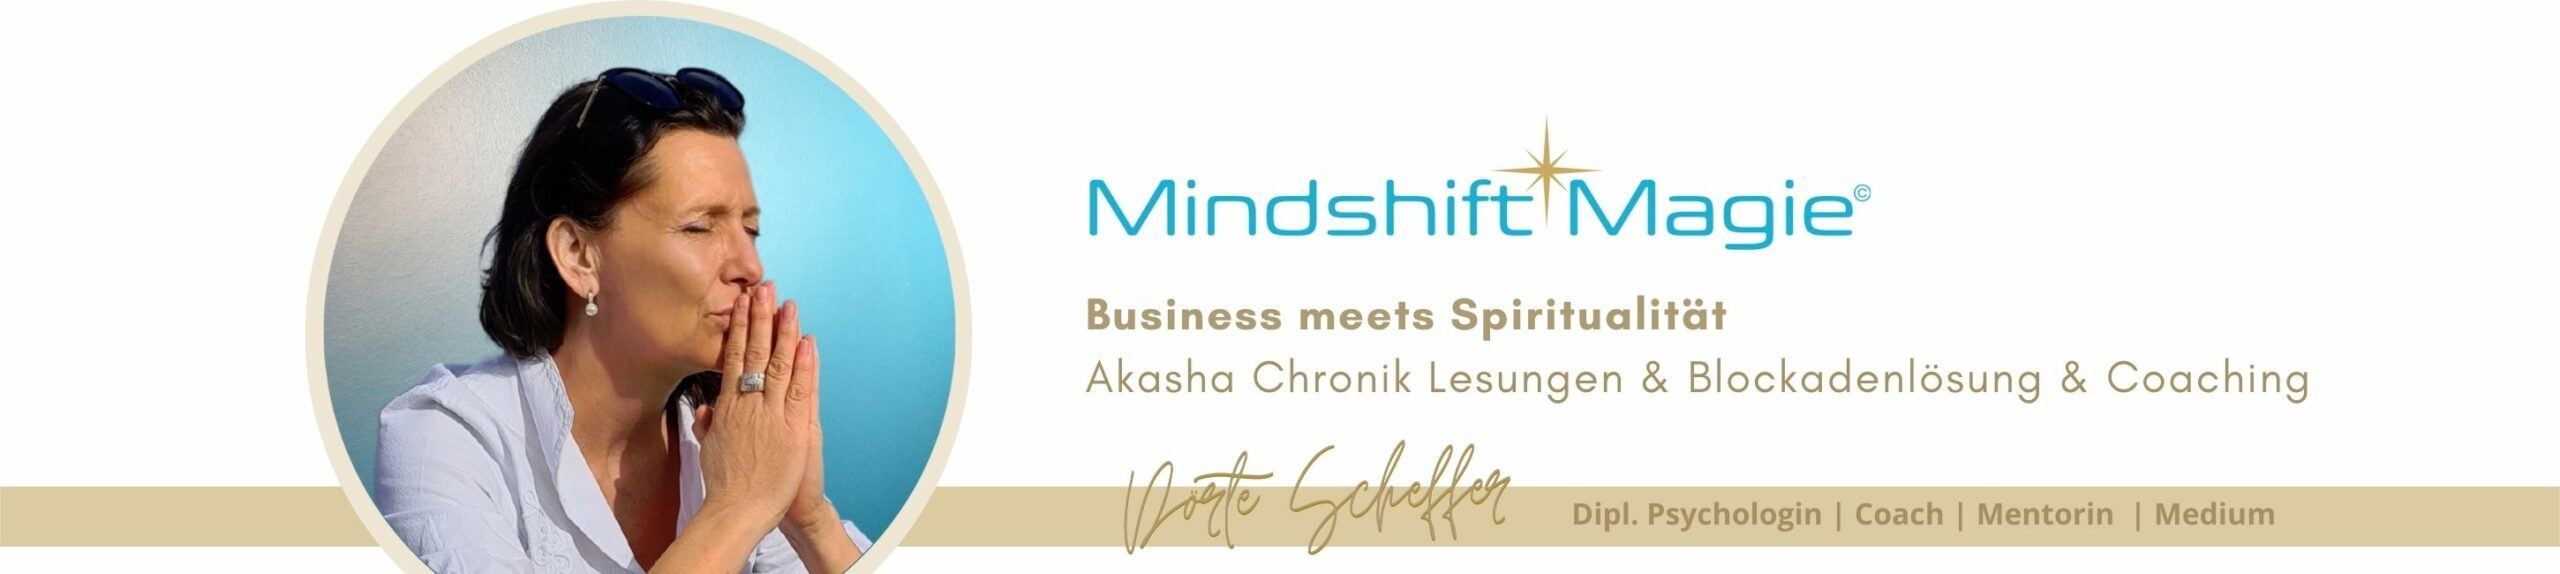 Mindshift Magie | Coaching Mentoing Akasha Chronik Lesungen